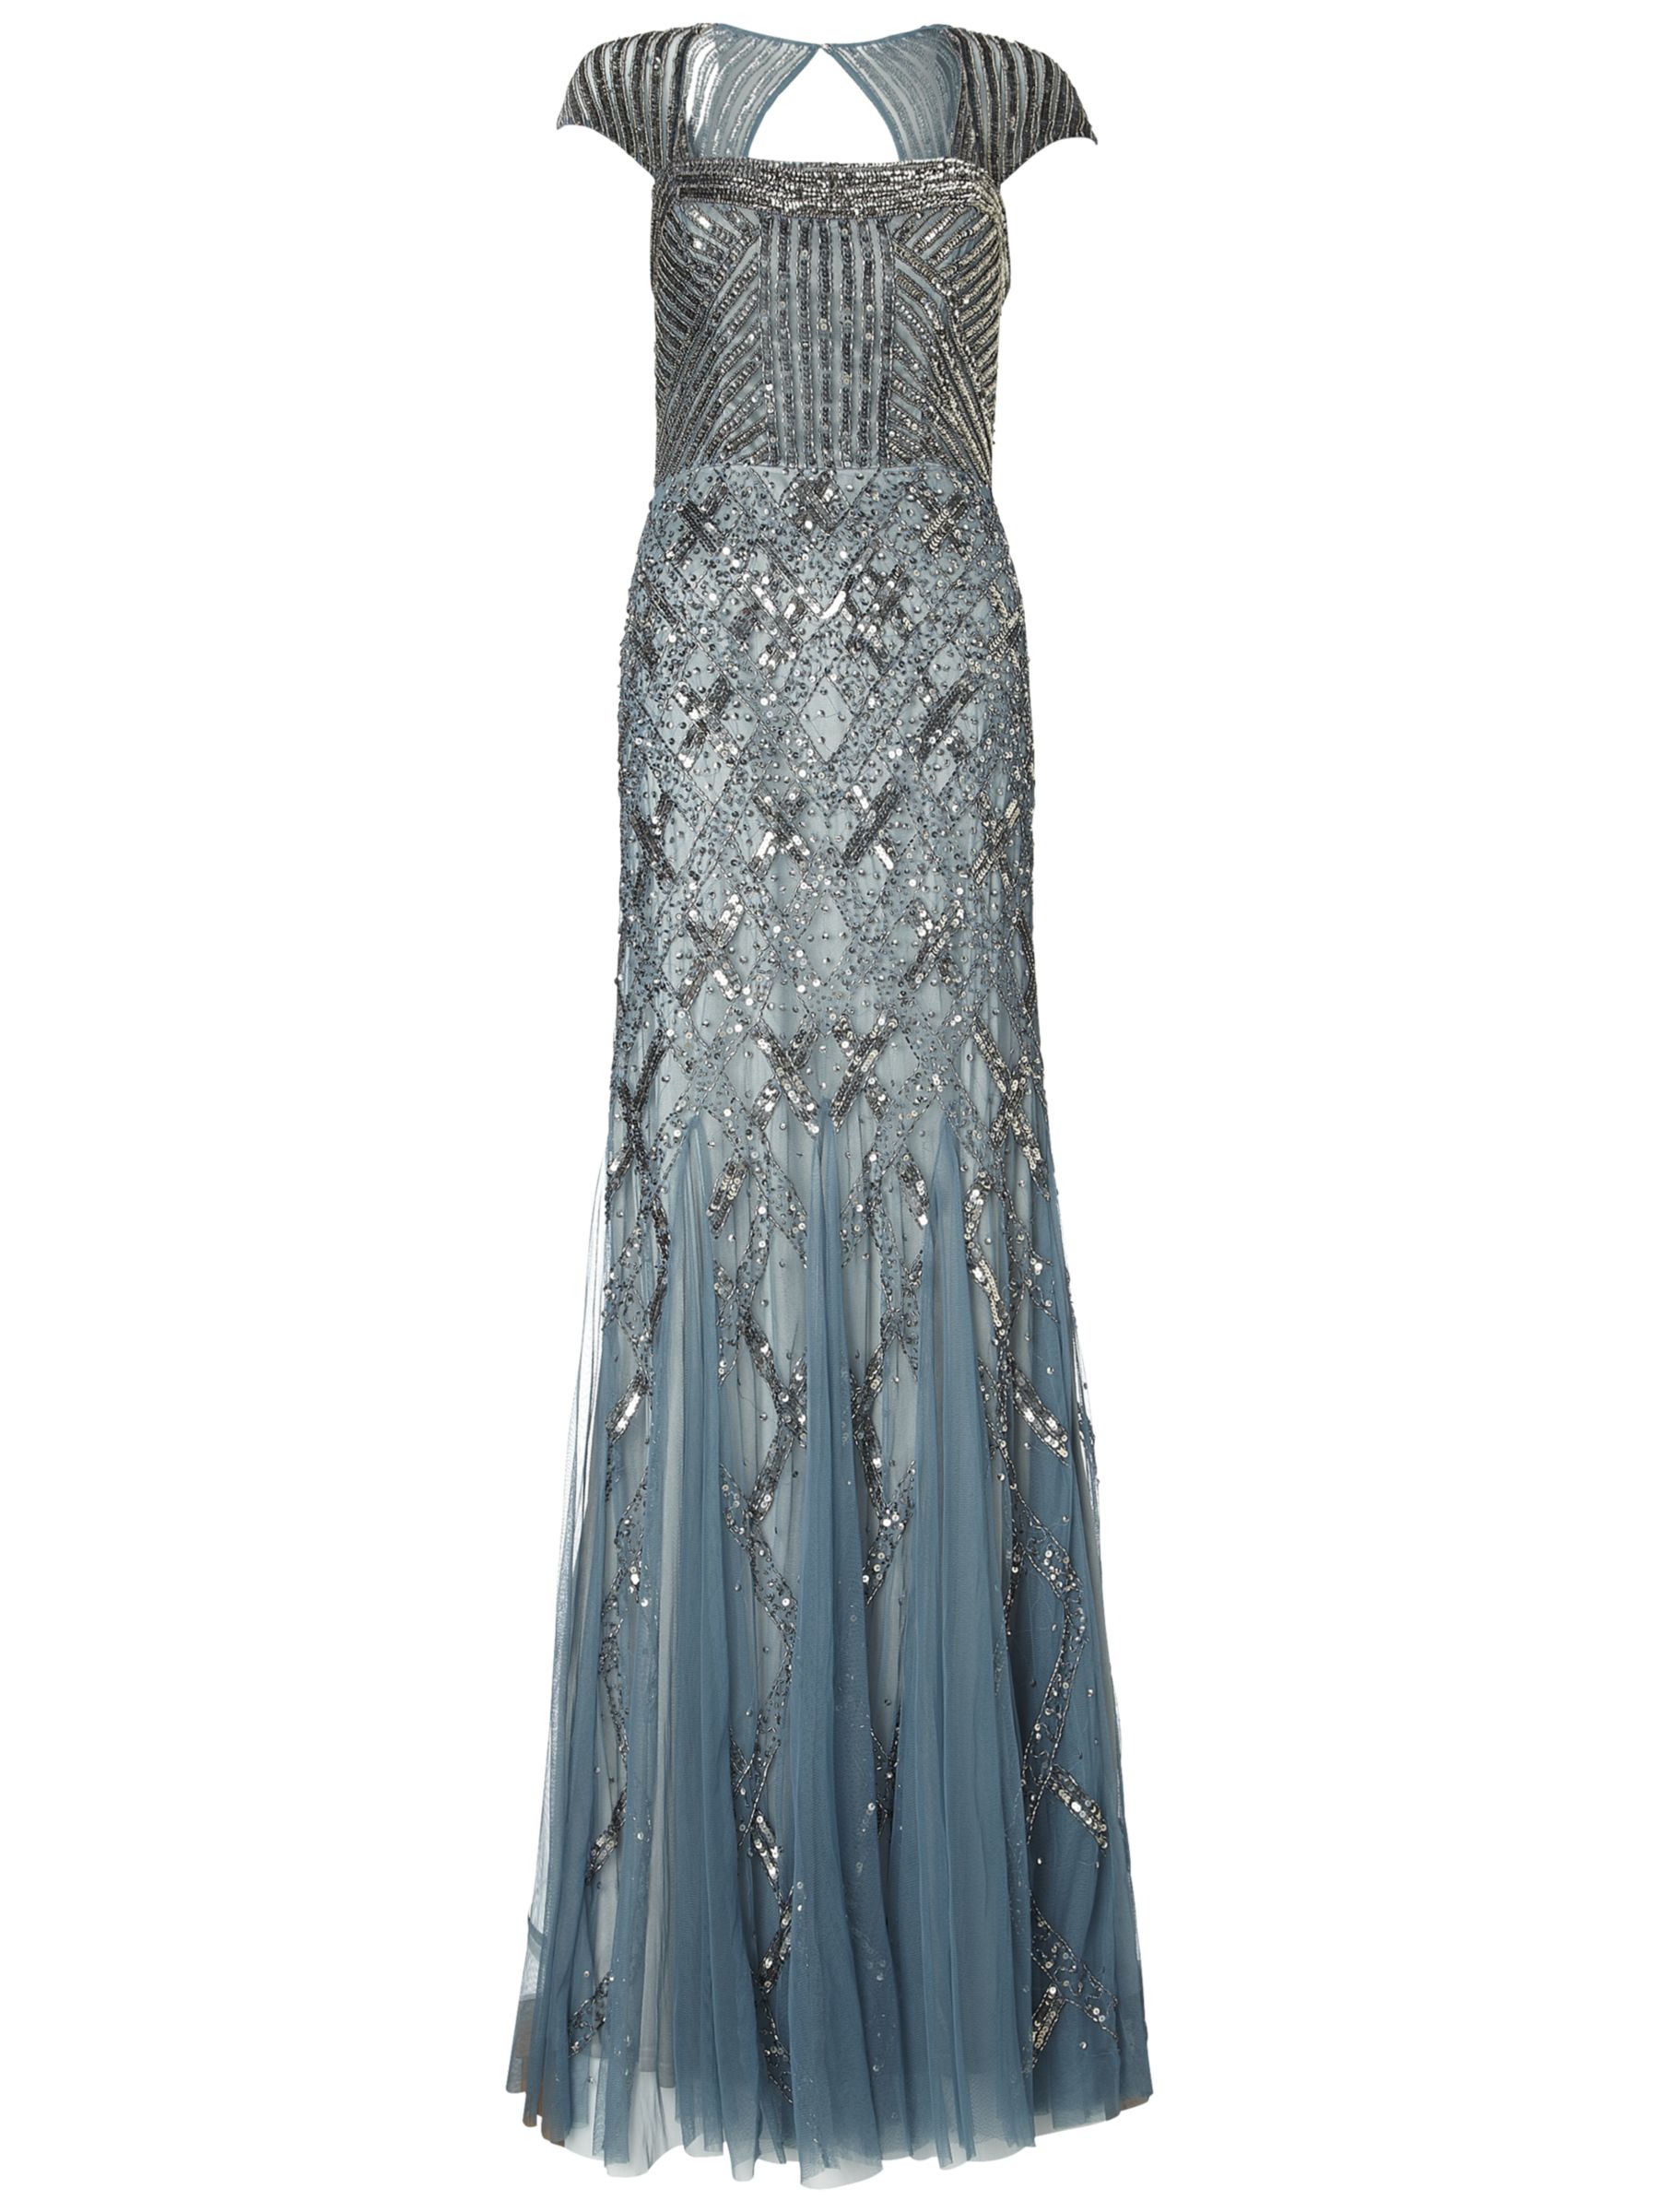 Adrianna Papell Beaded Dress, Slate at John Lewis & Partners